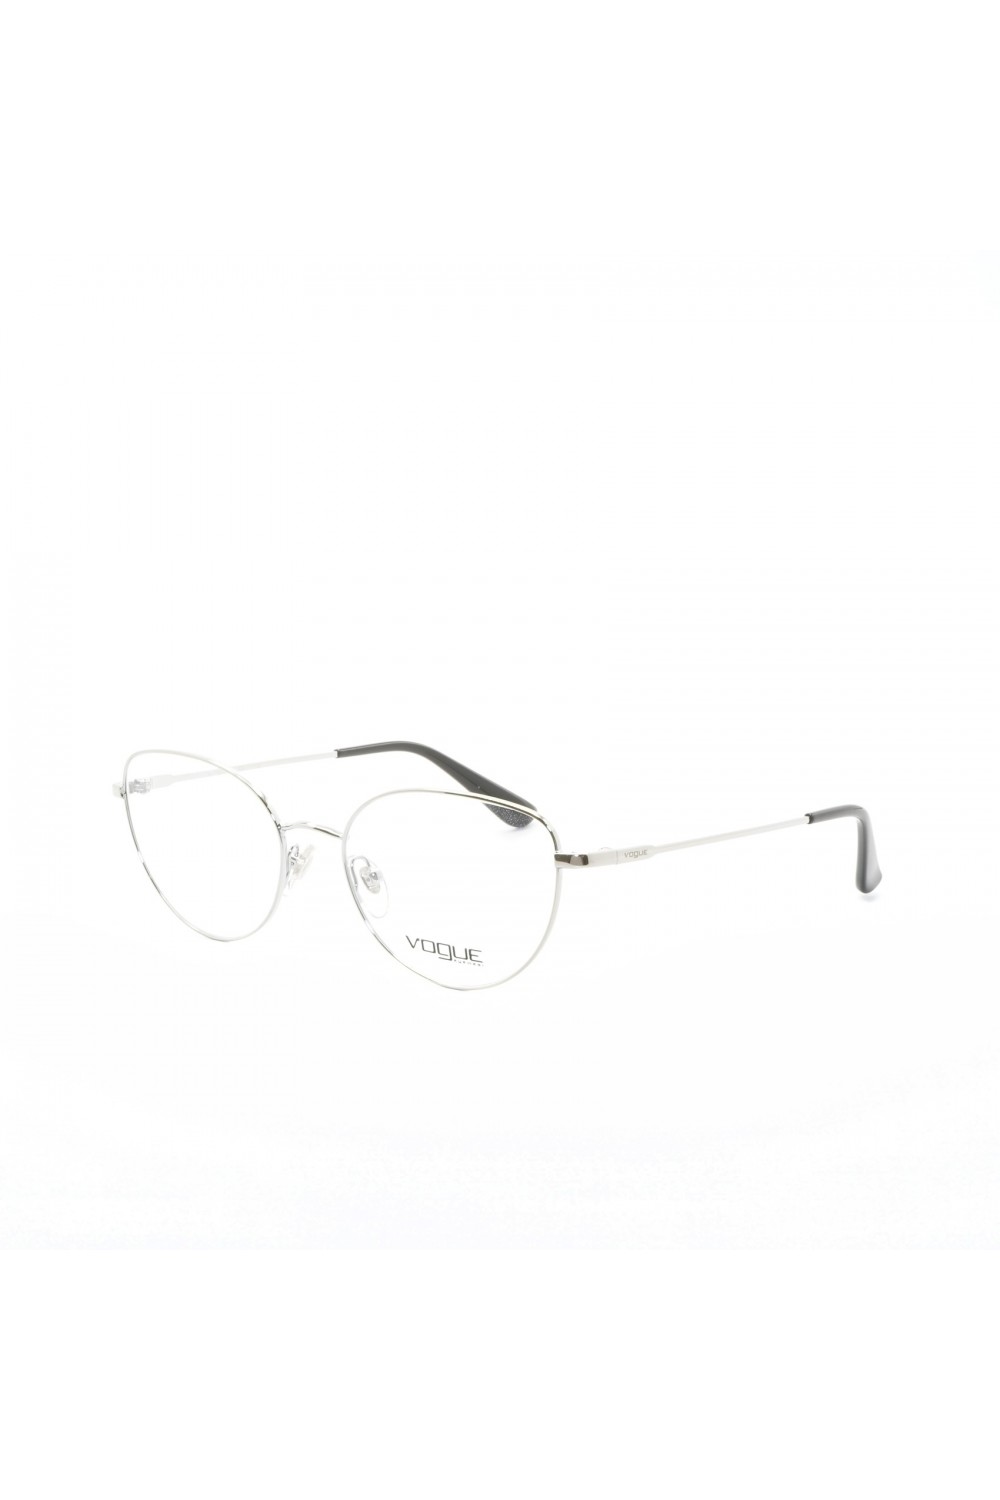 Vogue - Occhiali da vista in metallo cat eye per donna silver - 4128 323